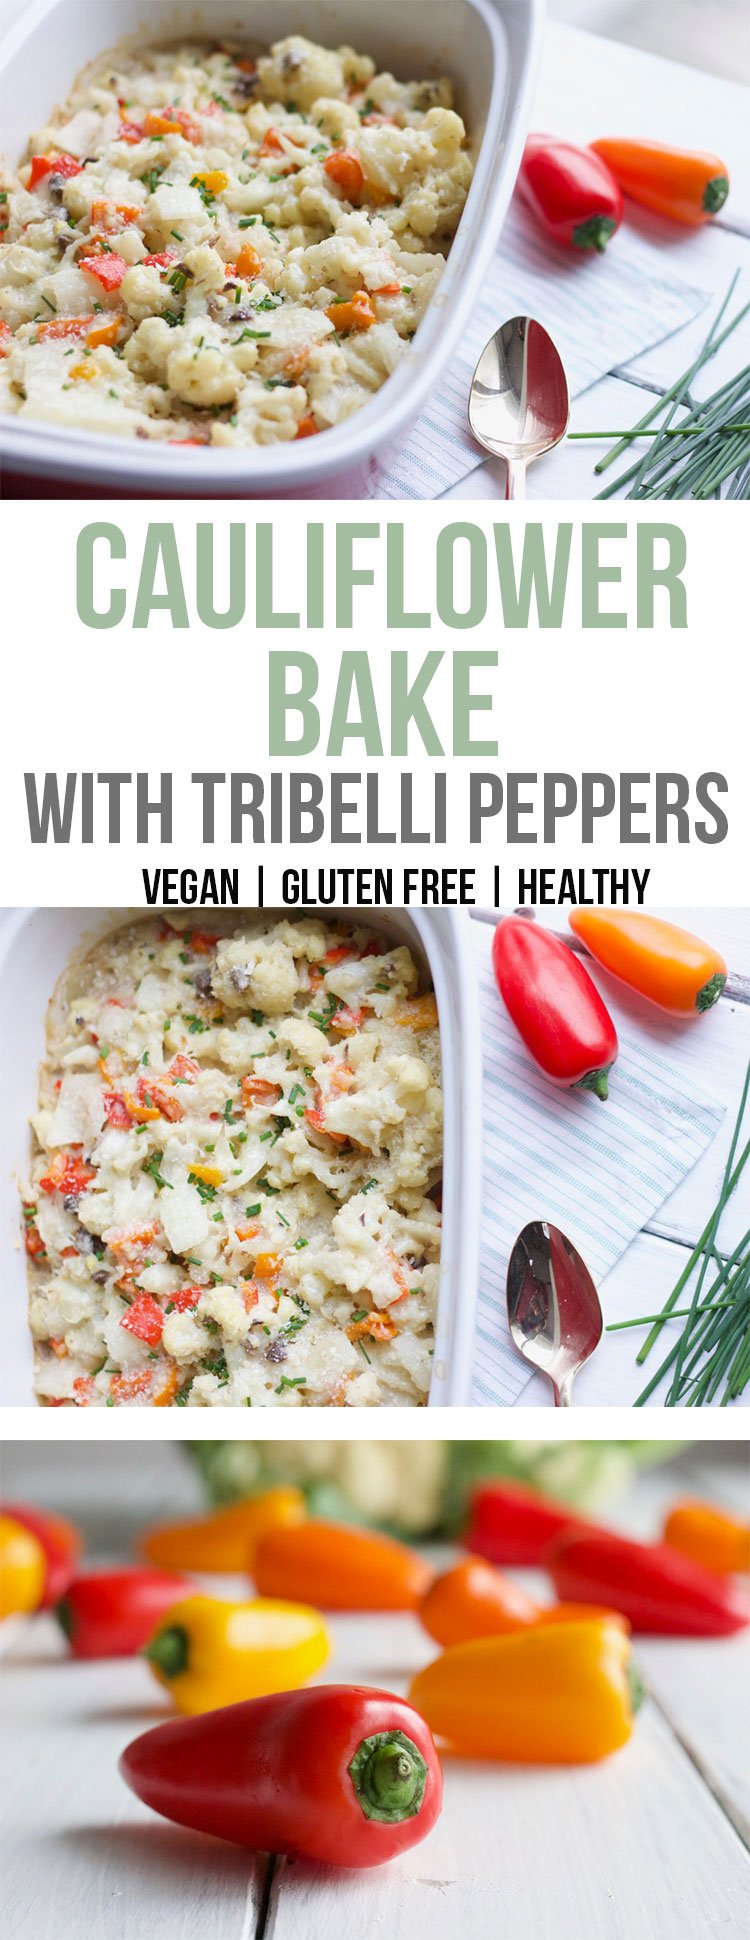 Creamy Cauliflower Bake with Tribelli Peppers || Gluten free, dairy free, vegan - Nikki's Plate www.nikkisplate.com